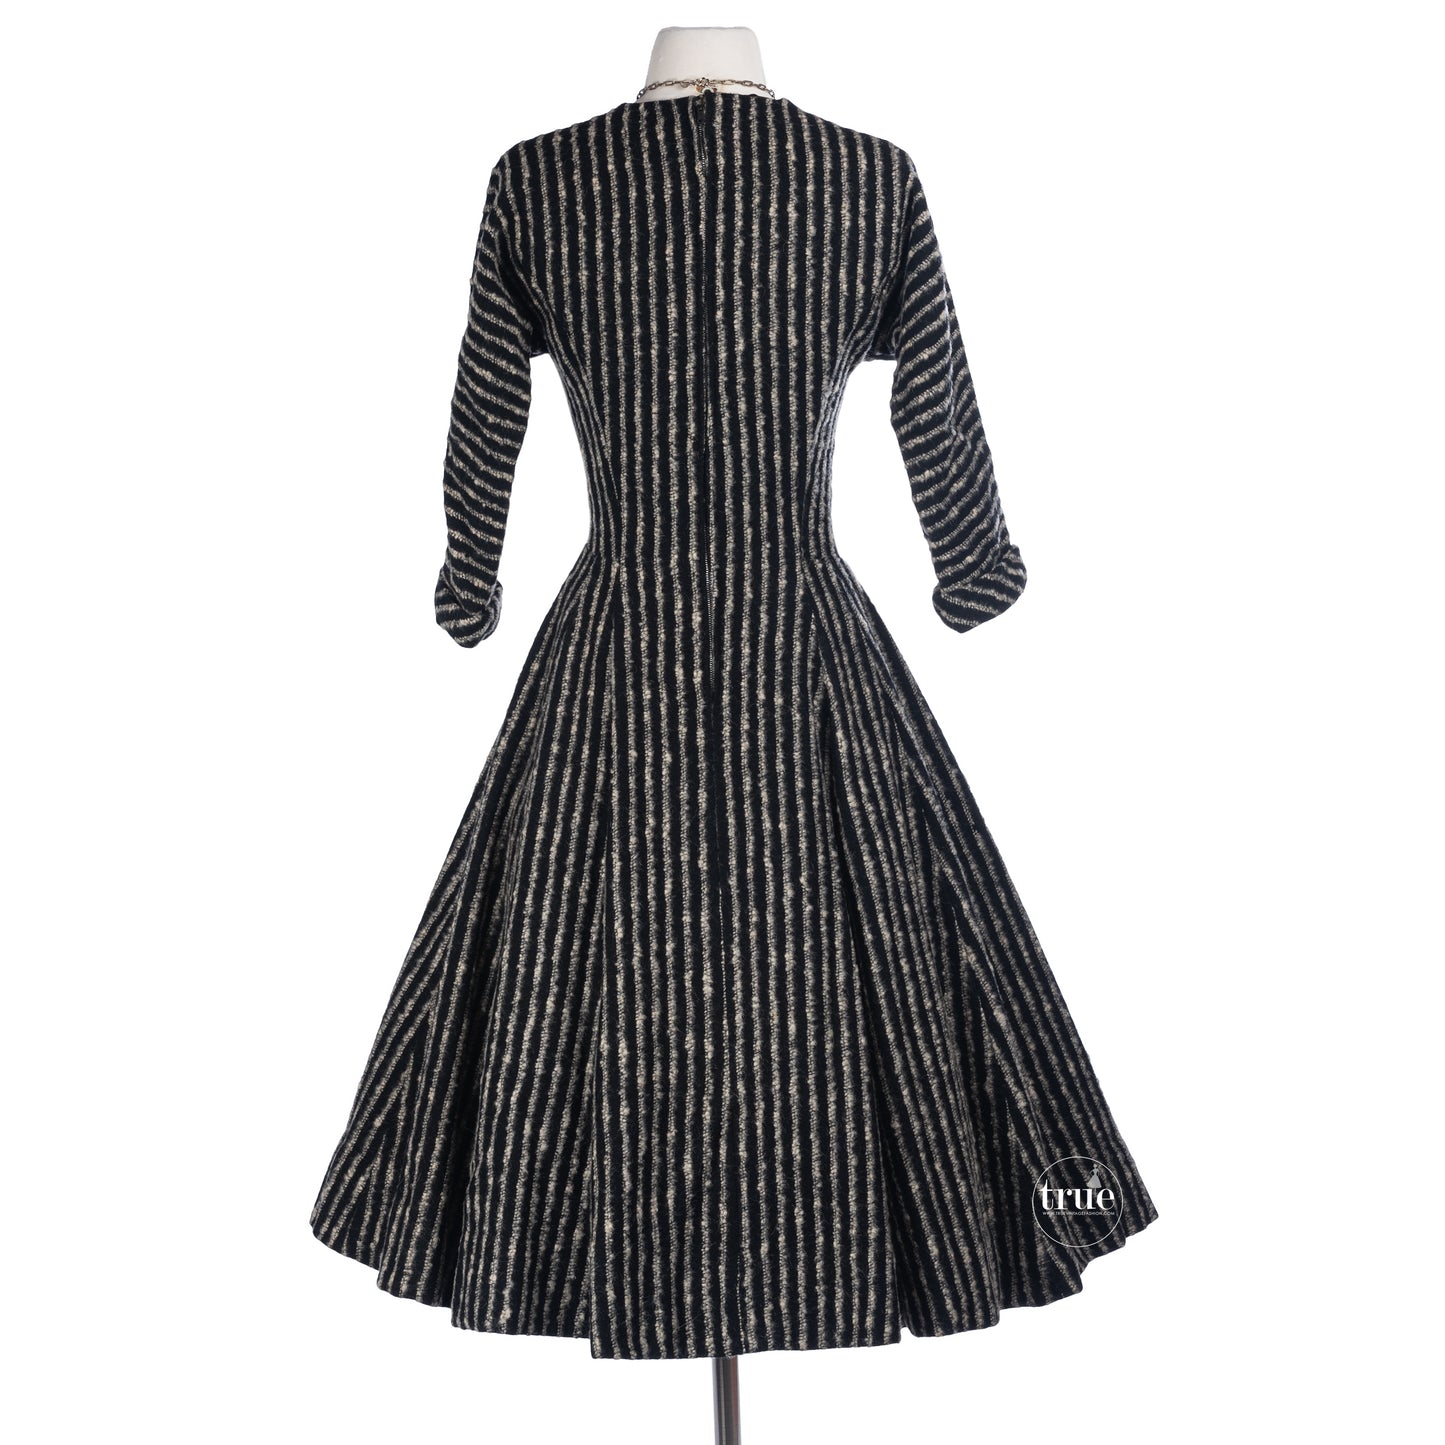 vintage 1950's dress ...striped wool sweater full skirt dress